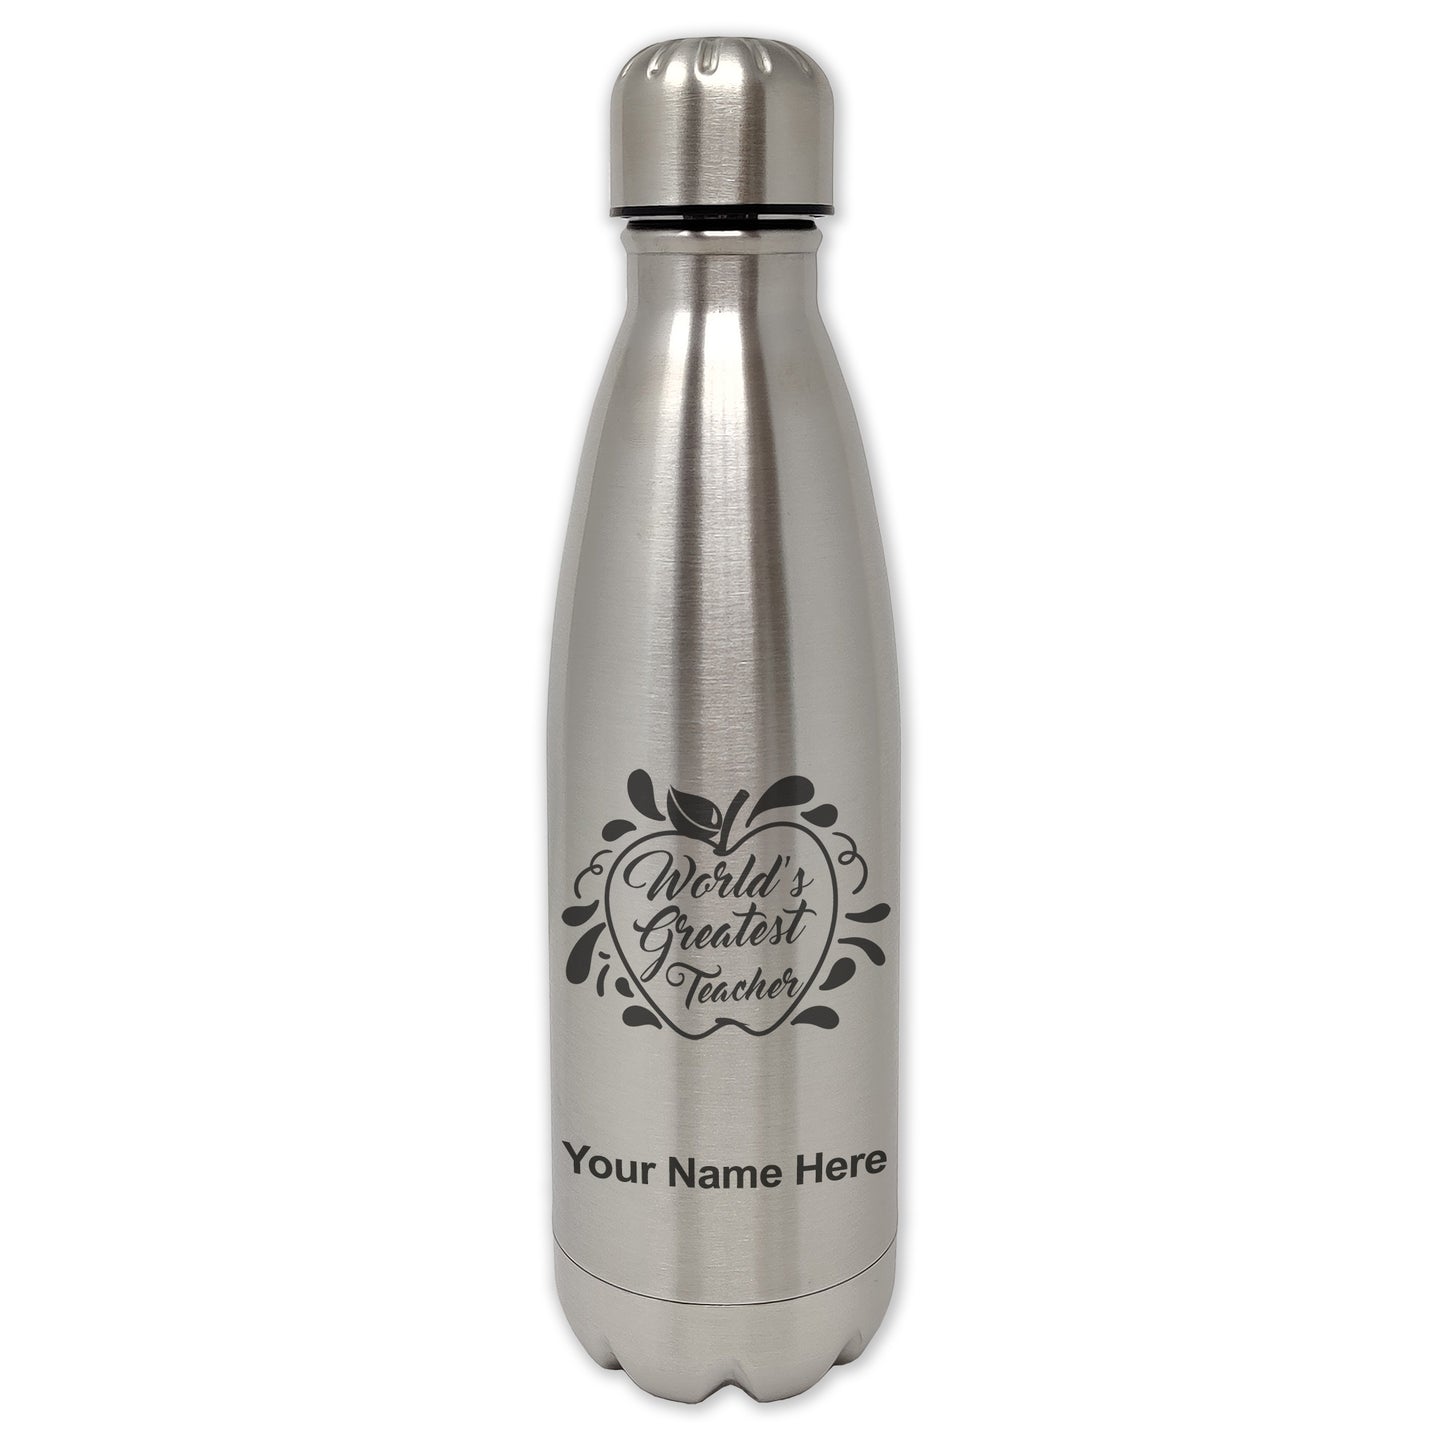 LaserGram Single Wall Water Bottle, World's Greatest Teacher, Personalized Engraving Included